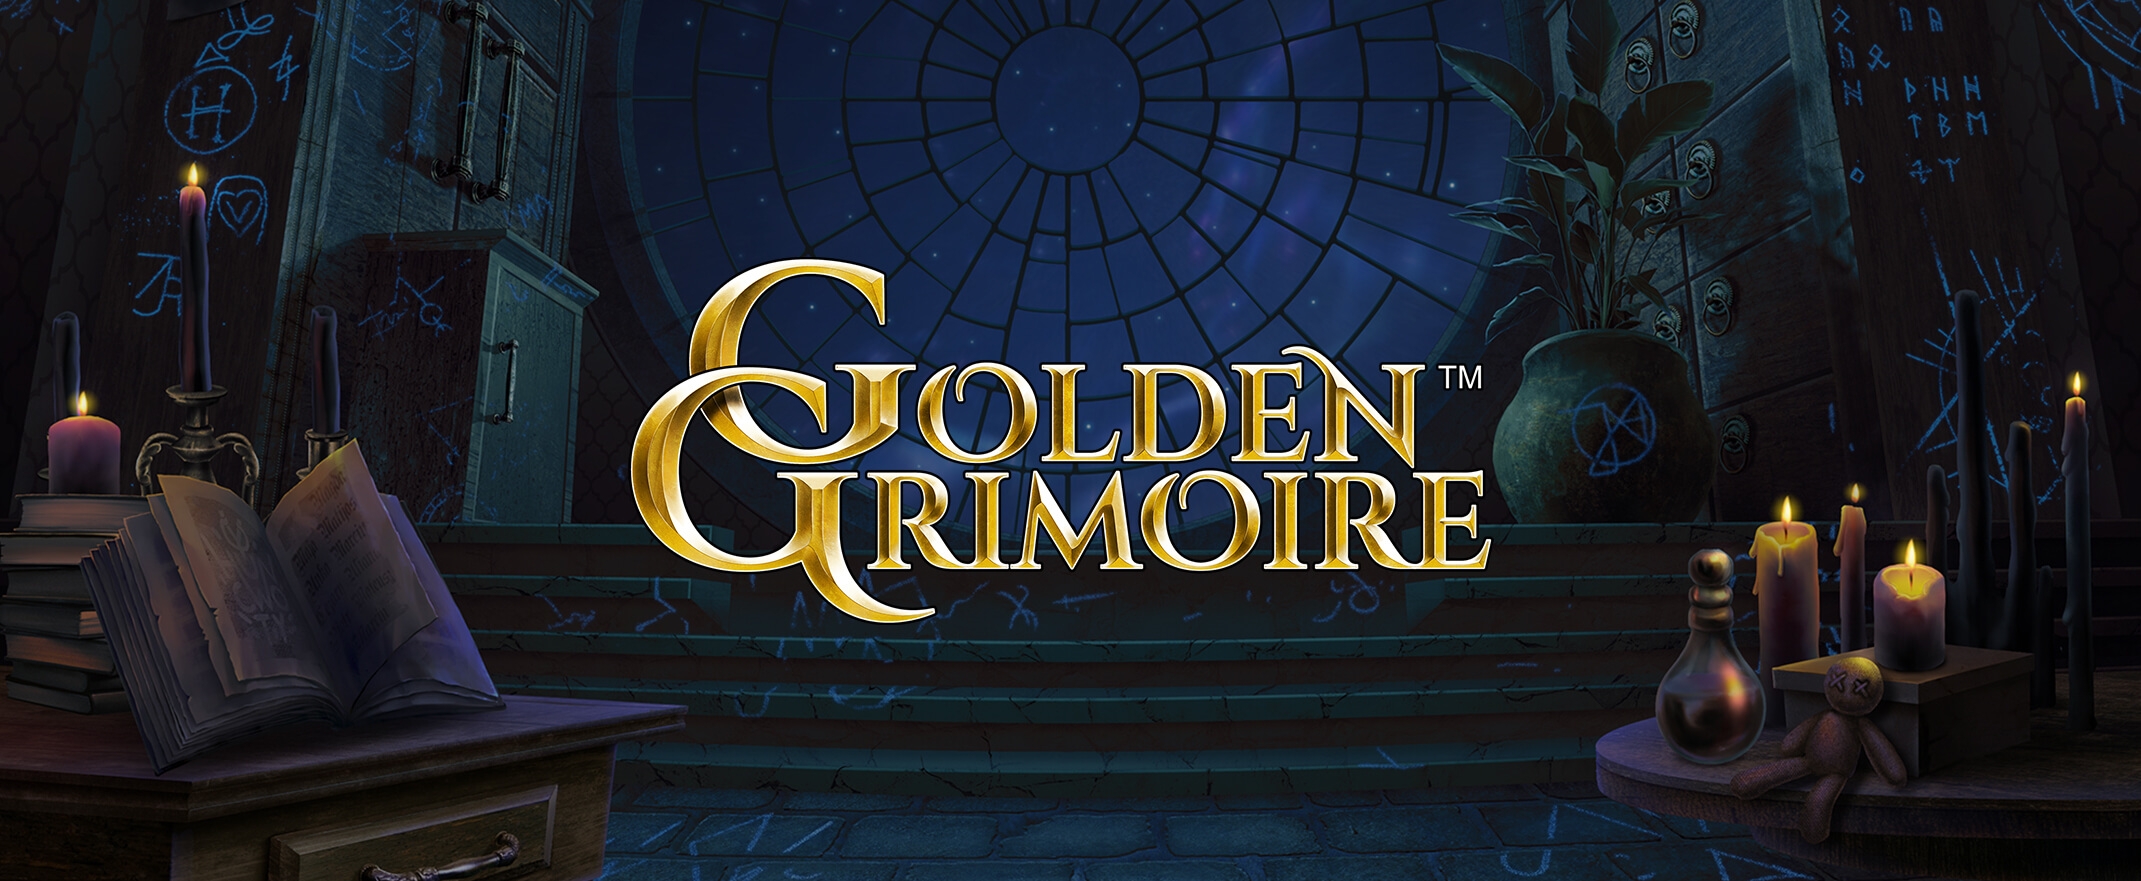 Golden Grimoire video slot from NetEnt